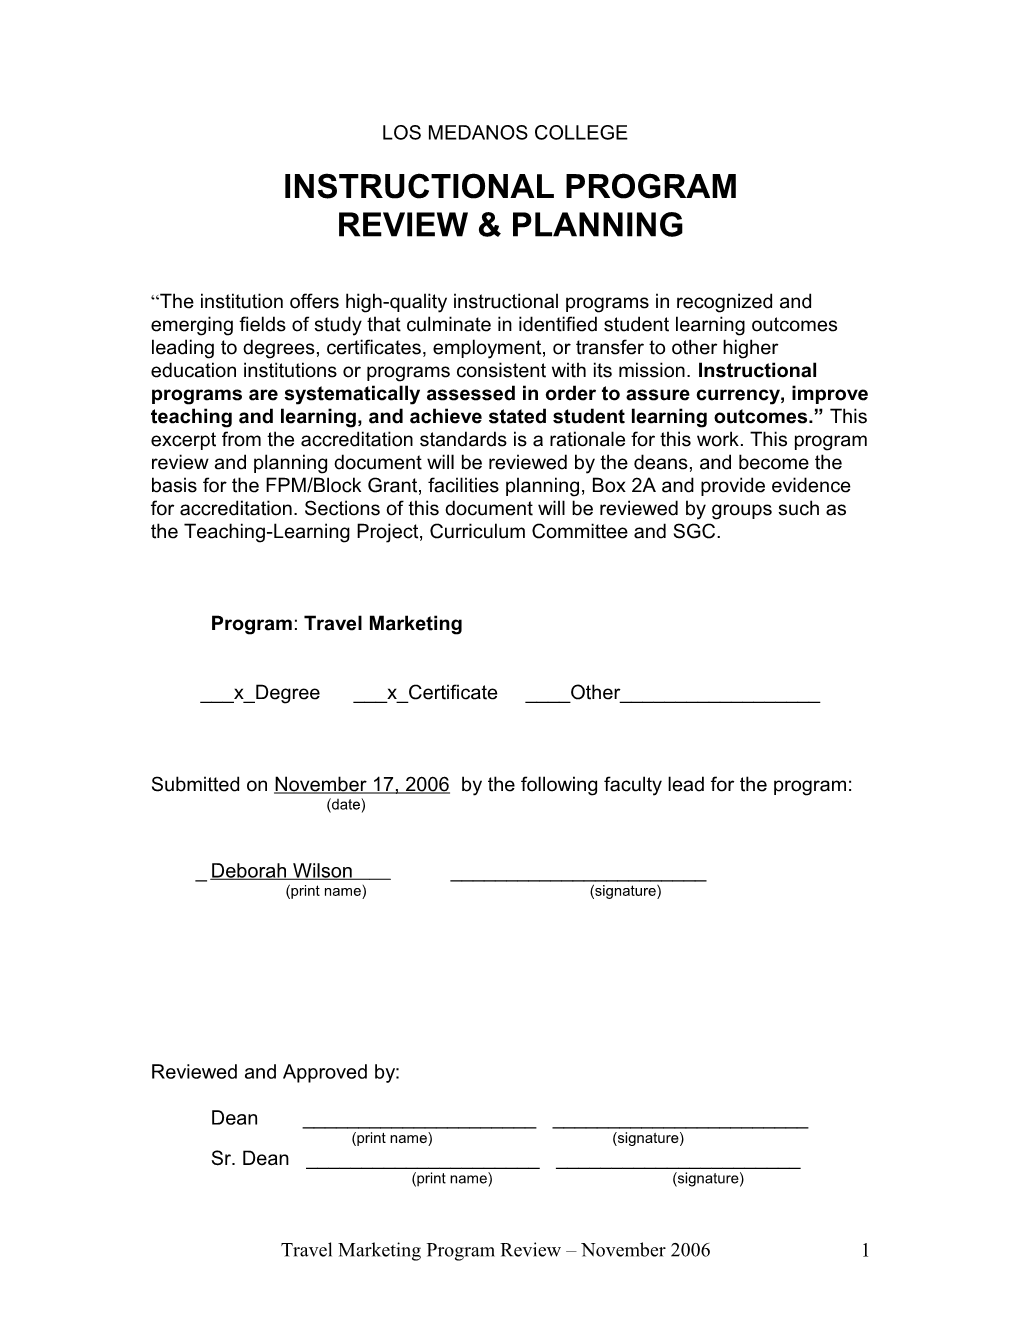 Instructional Program Review & Planning